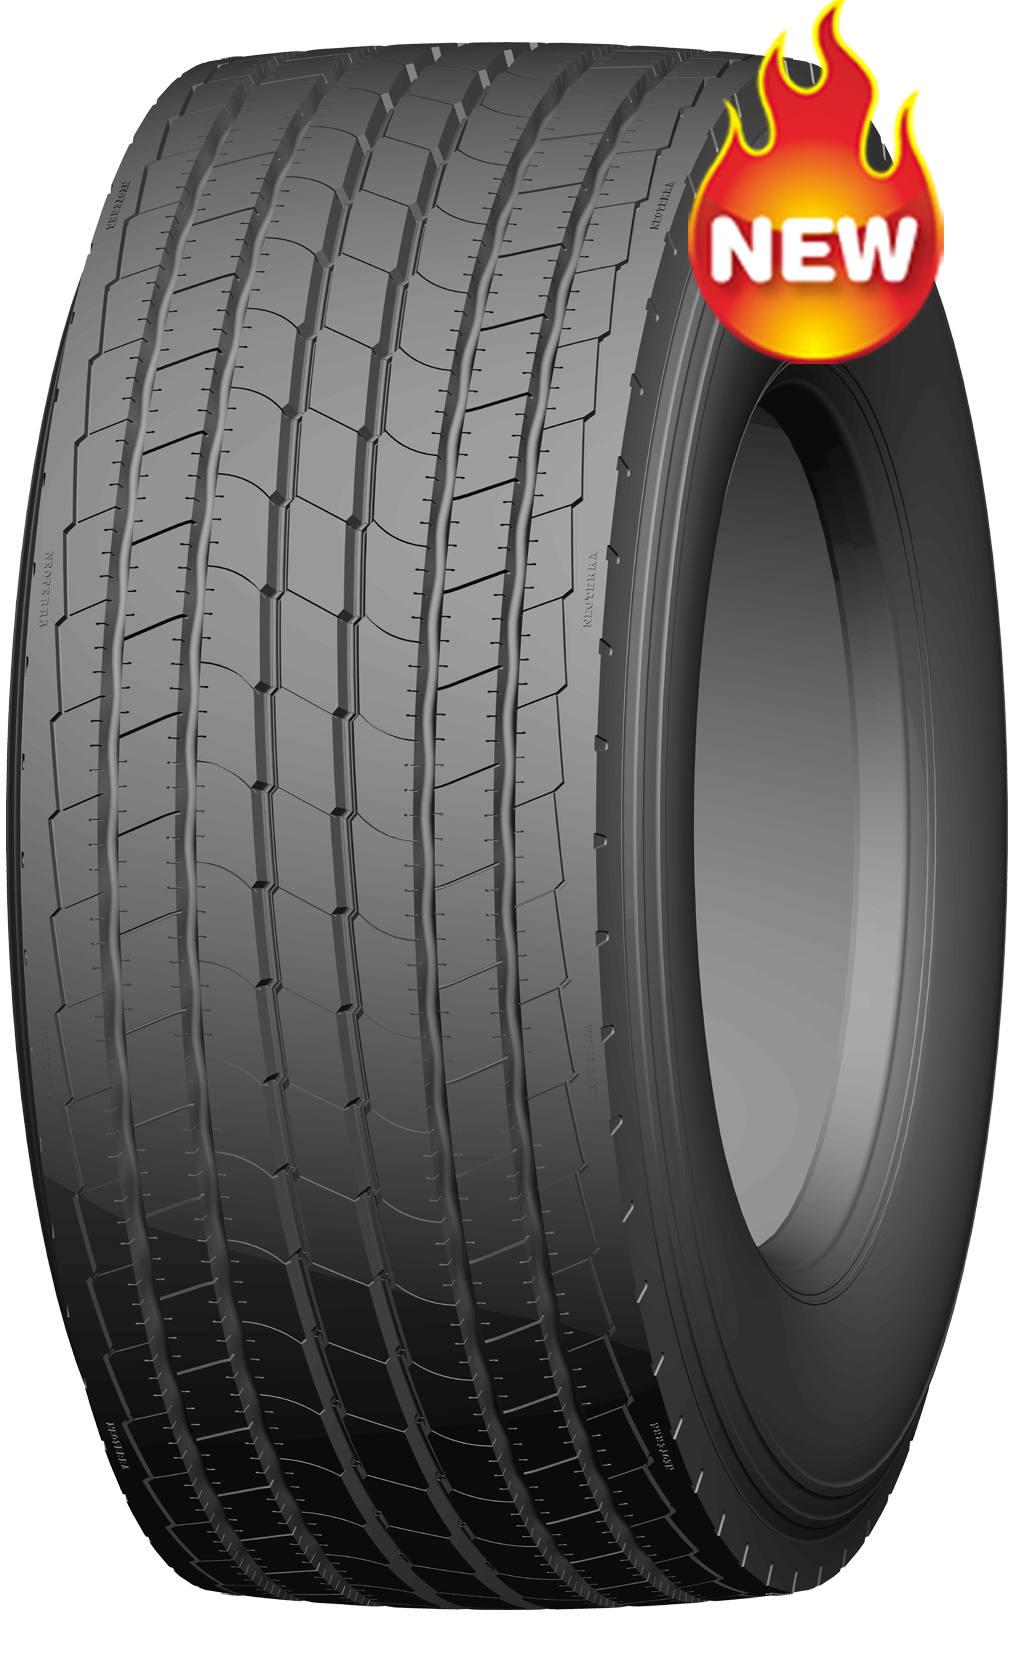 2018 new pattern nt355 445/50r22.5 truck tires